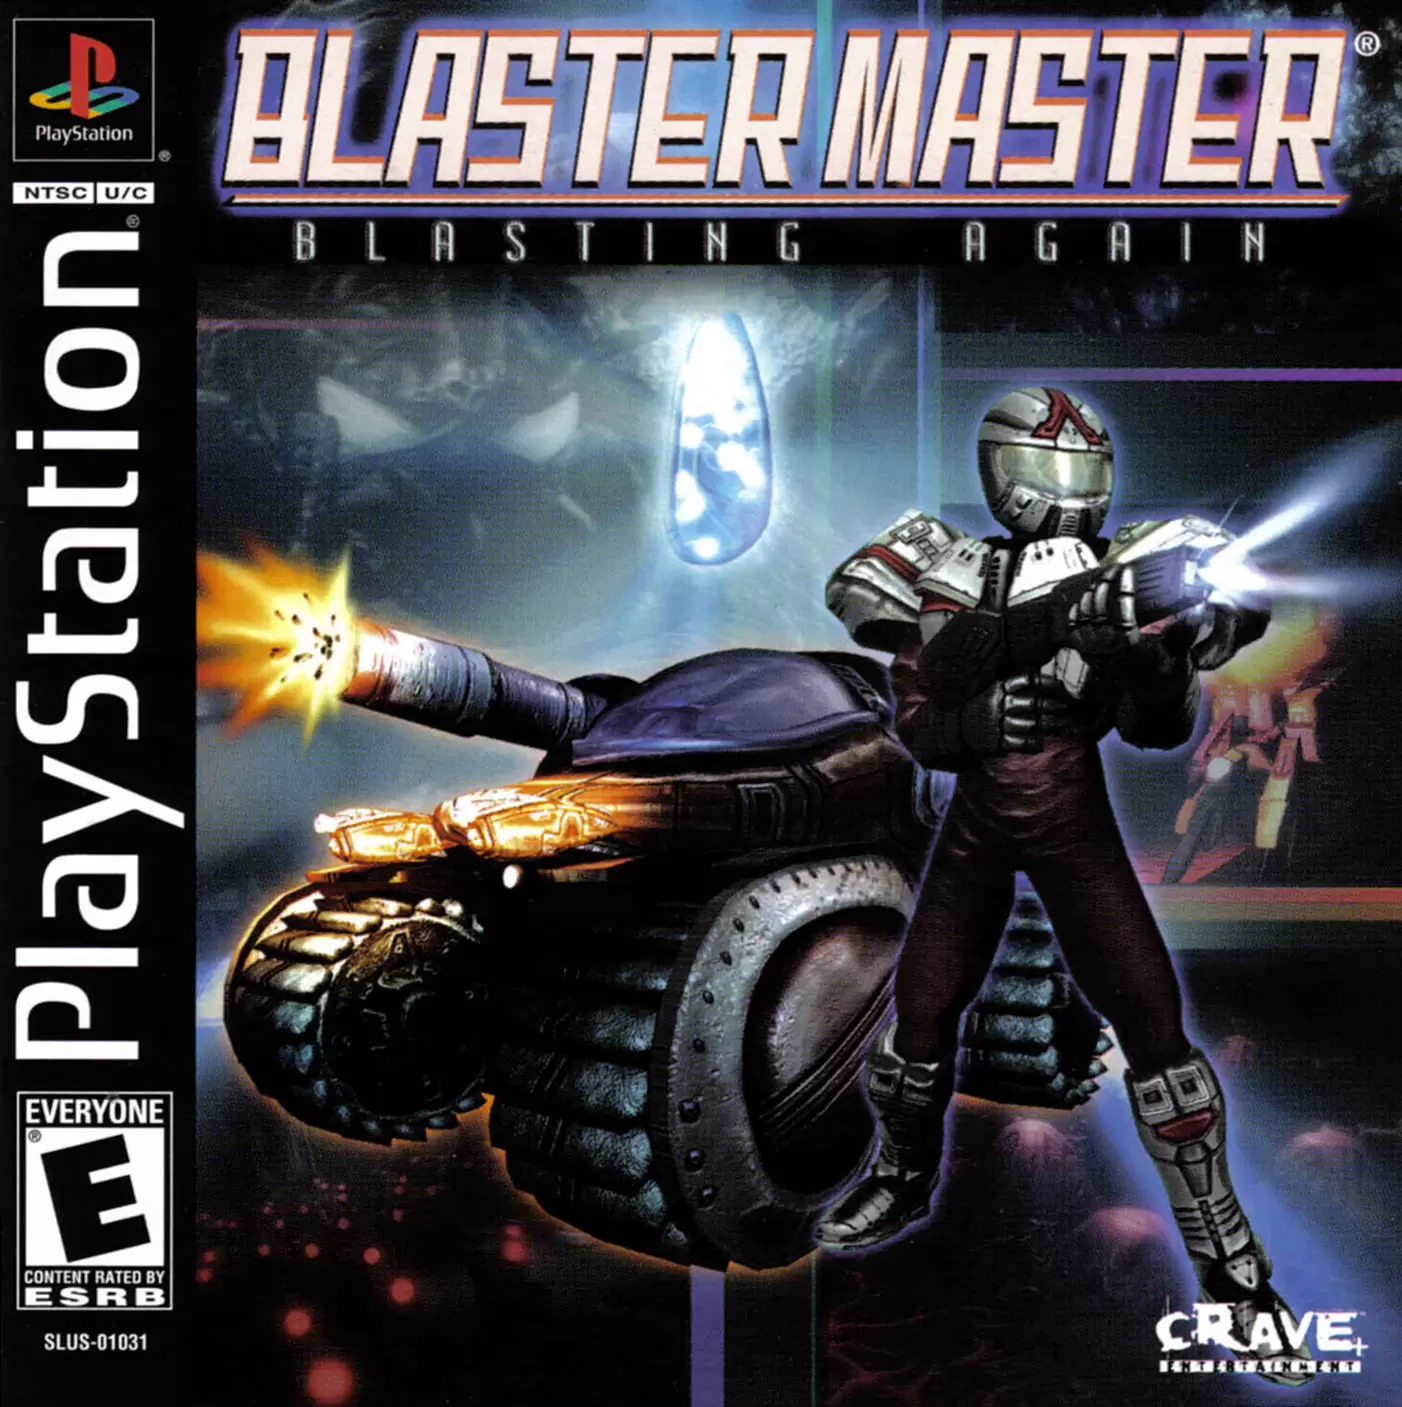 Playstation games - Blaster Master: Blasting Again